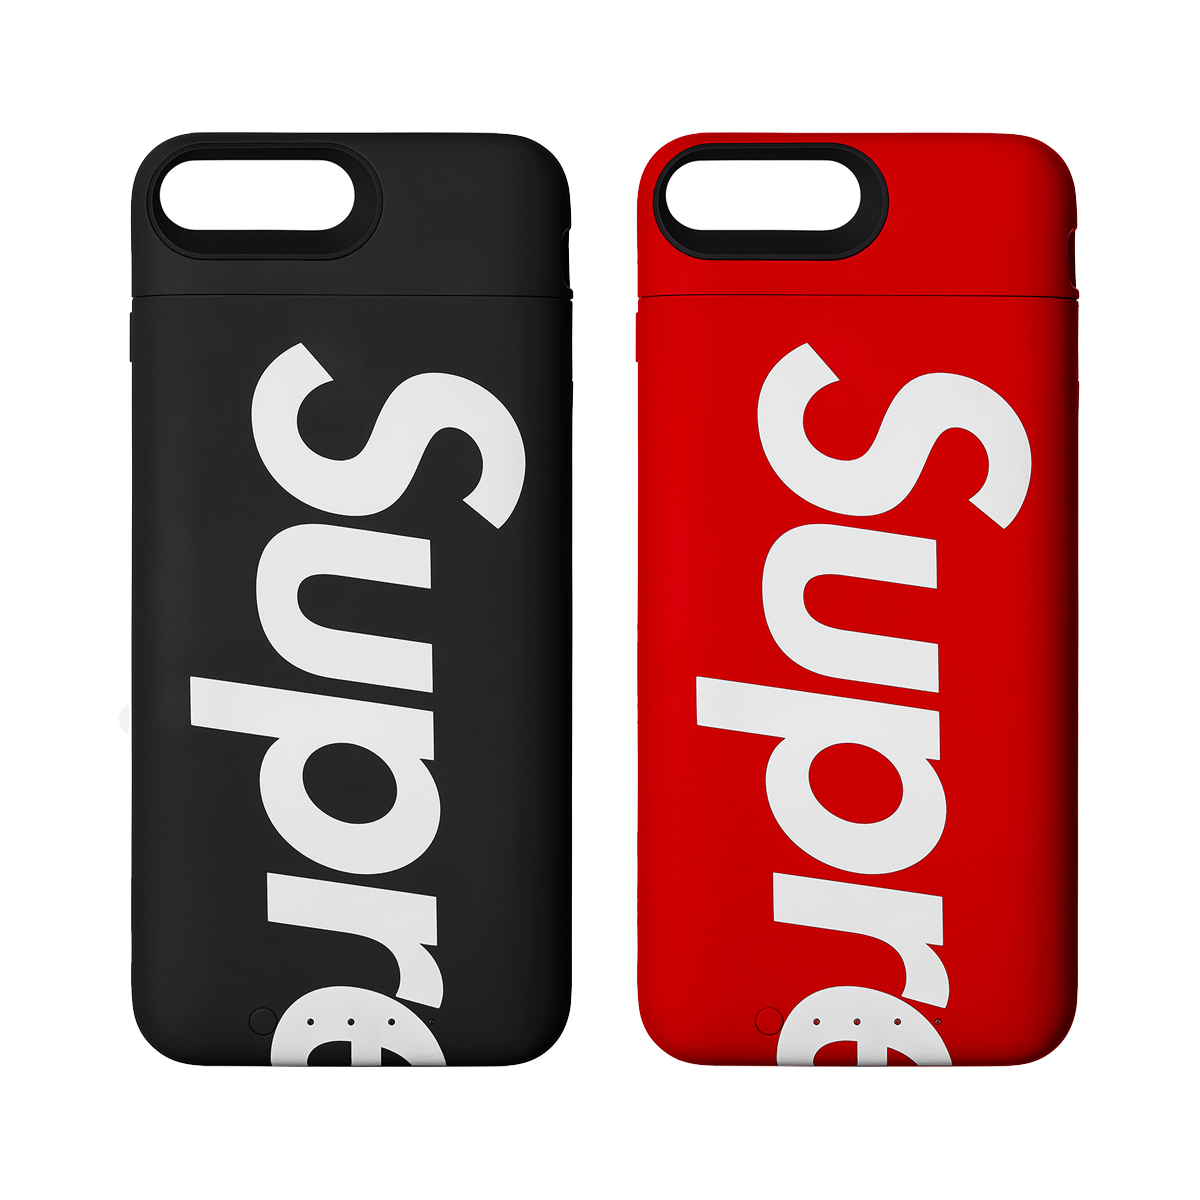 Supreme® mophie® iPhone 8 Juice Pack Air